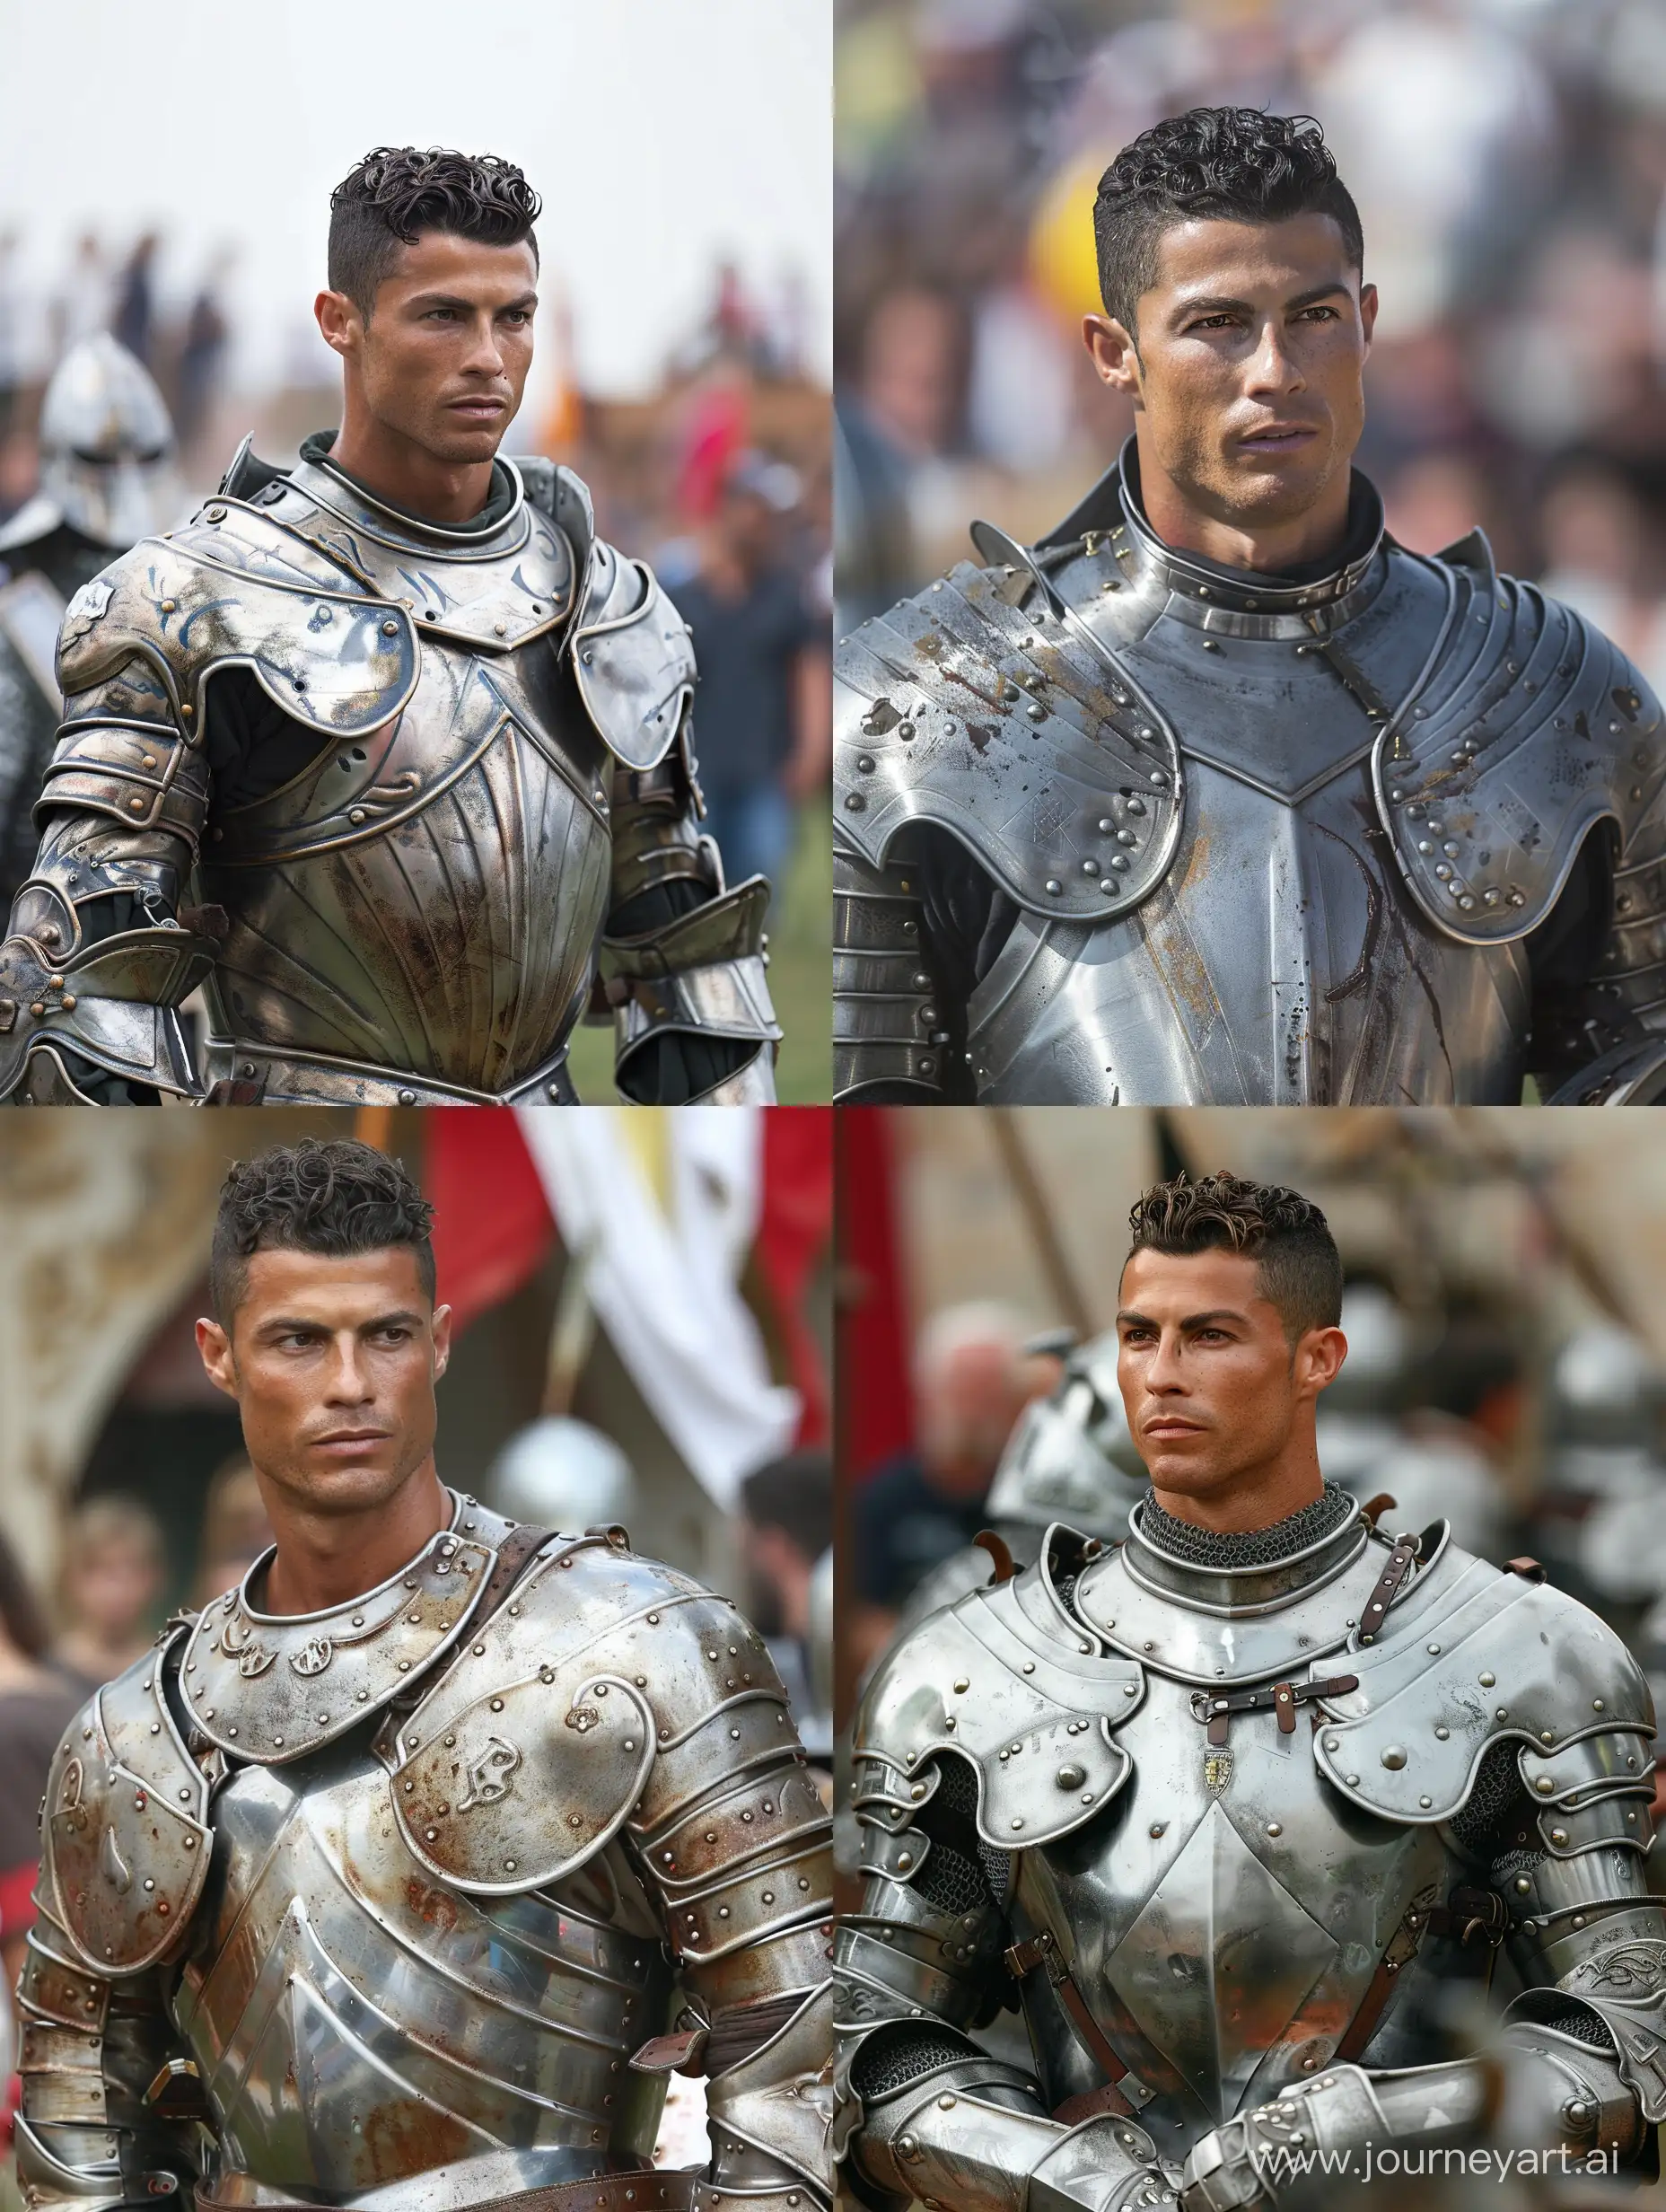 Cristiano-Ronaldo-Enchants-Medieval-Festival-in-Full-Armor